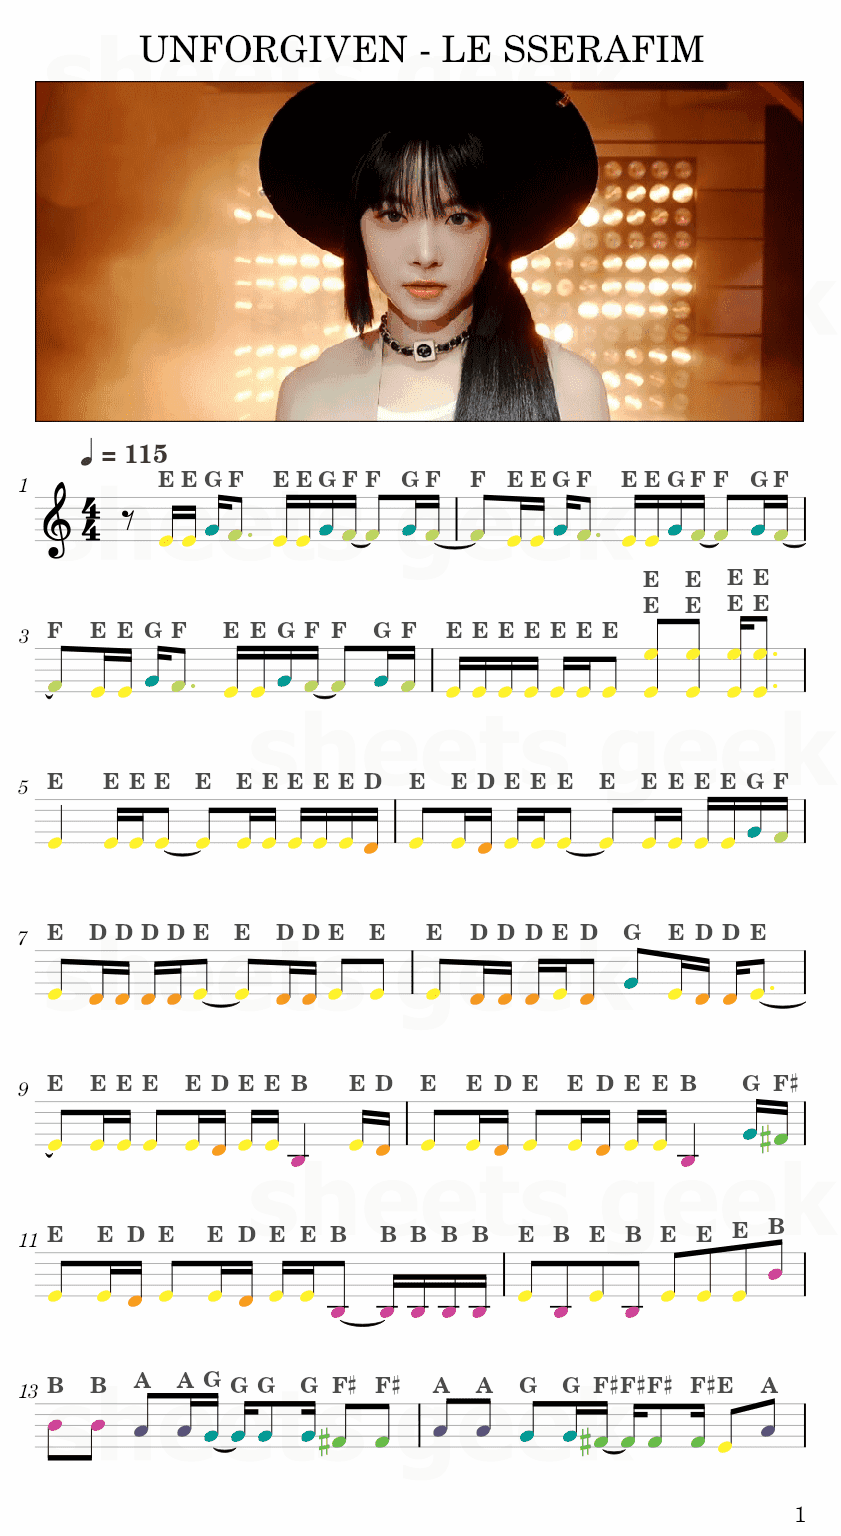 UNFORGIVEN - LE SSERAFIM feat. Nile Rodgers Easy Sheet Music Free for piano, keyboard, flute, violin, sax, cello page 1